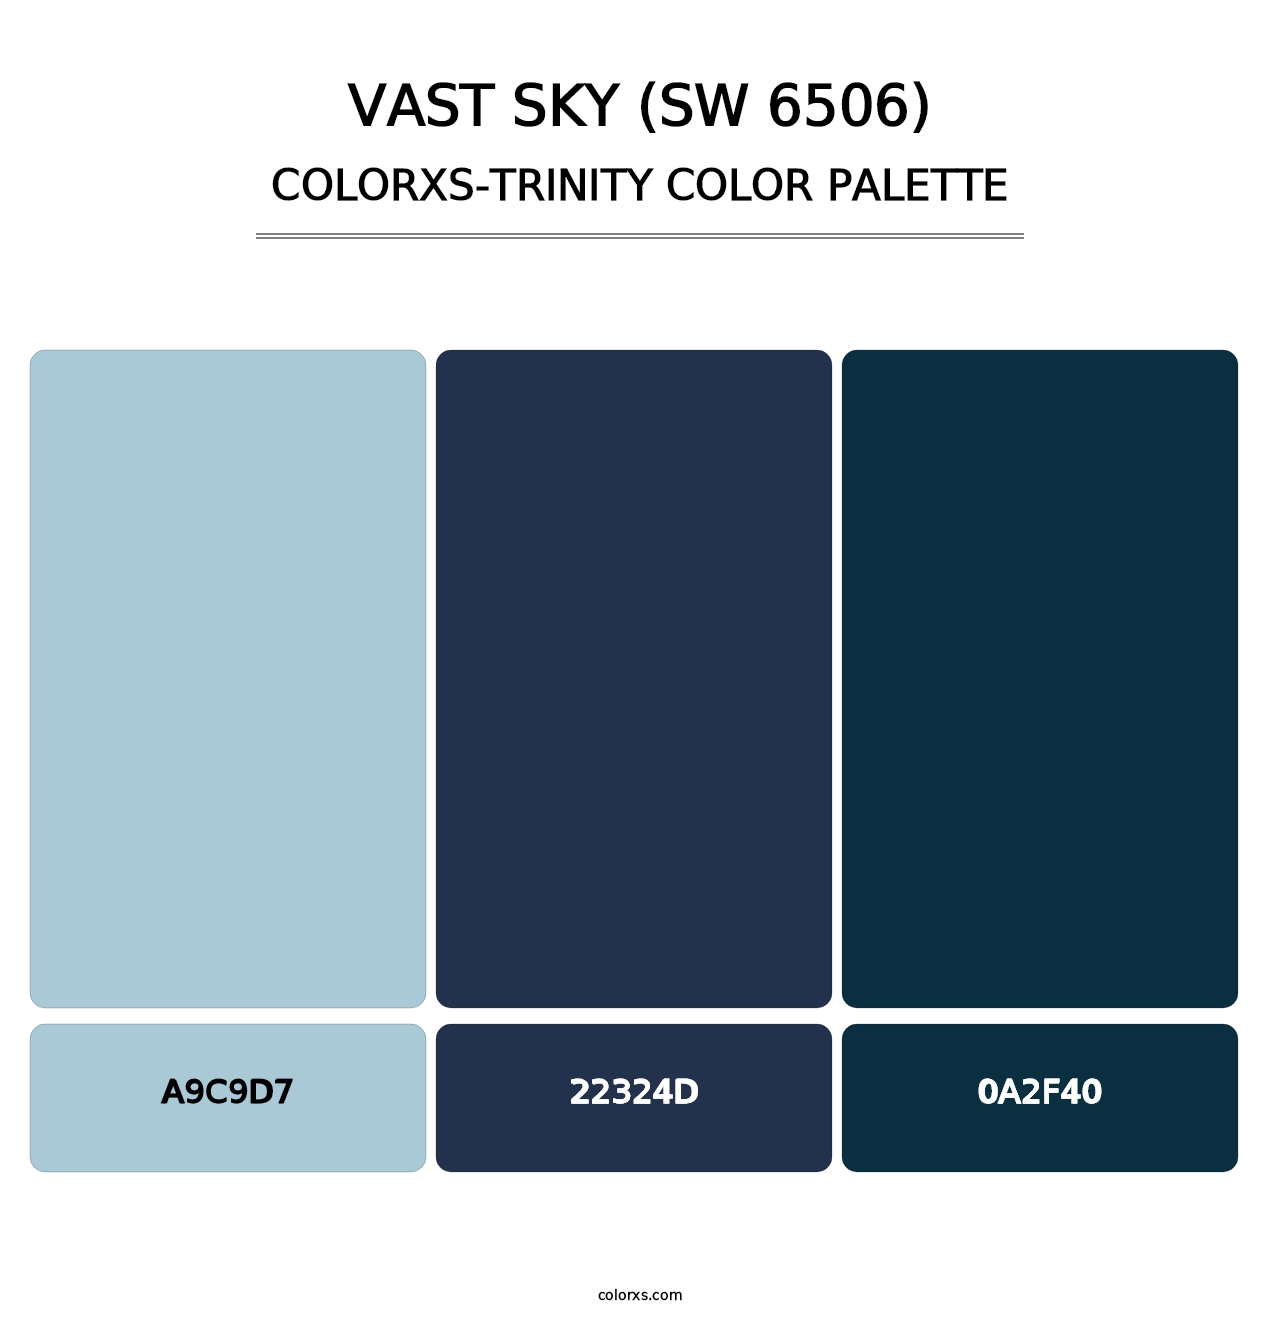 Vast Sky (SW 6506) - Colorxs Trinity Palette